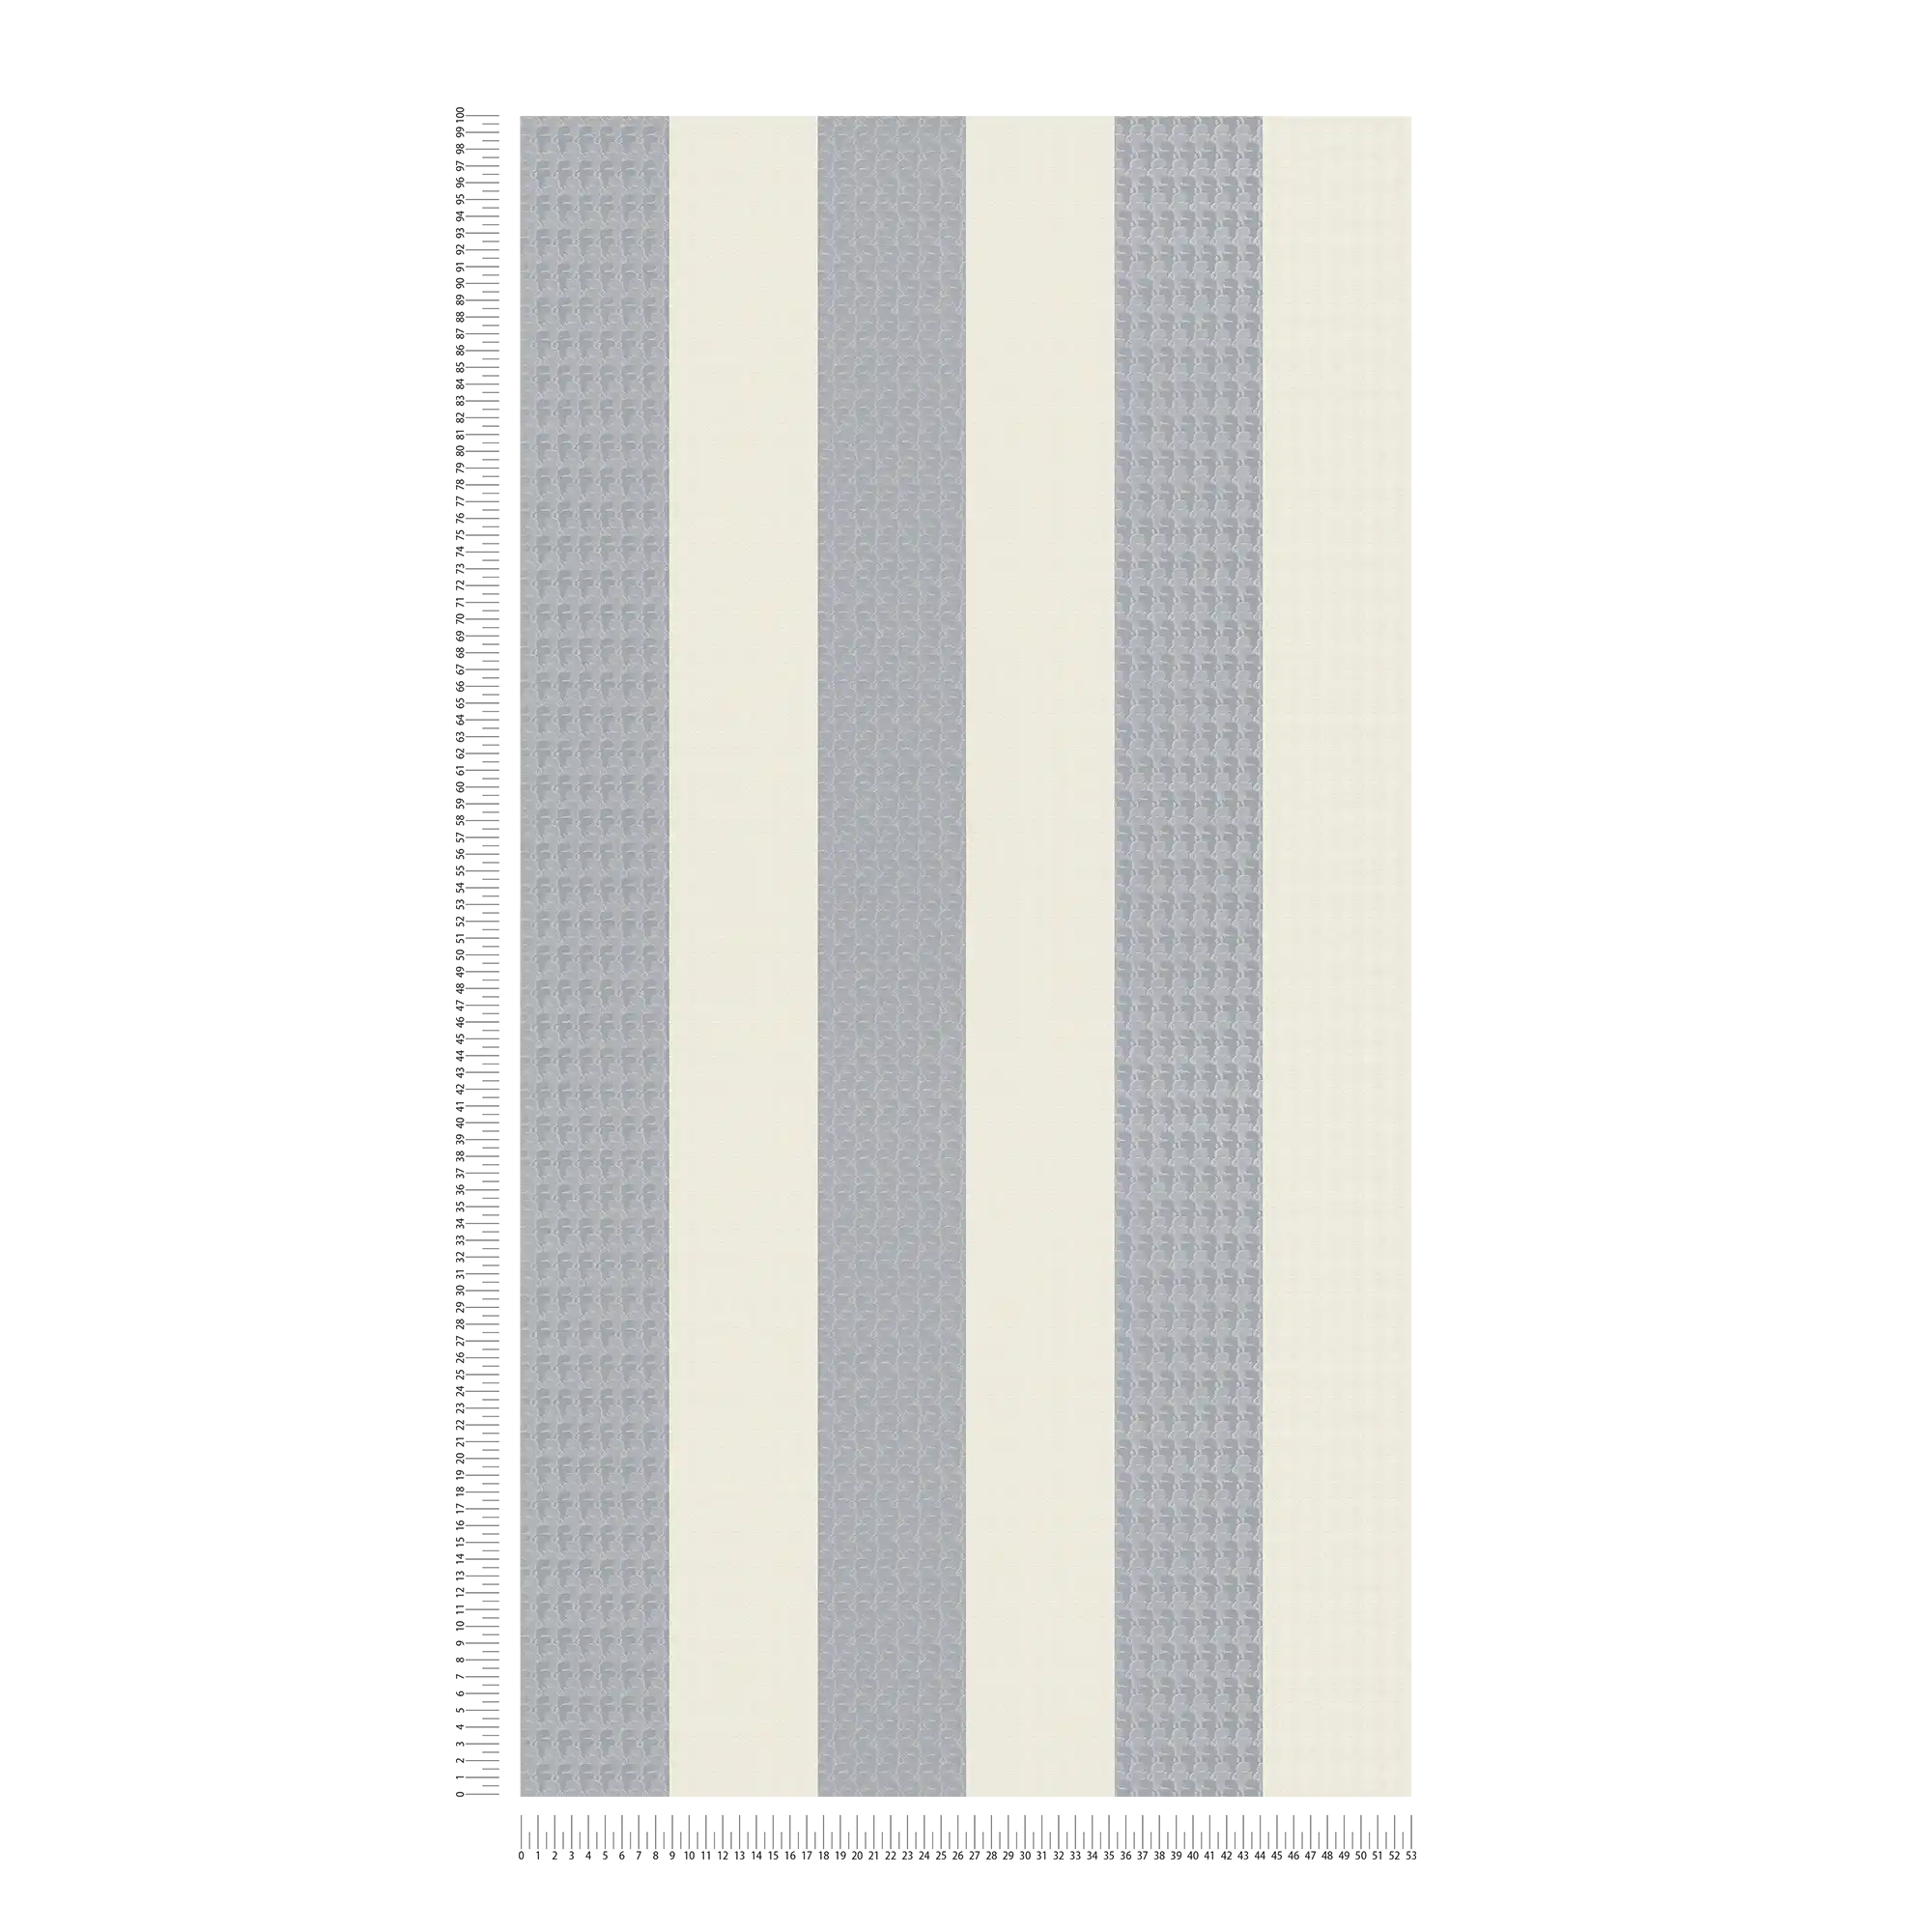             Karl LAGERFELD behangpapier streep & textuur patroon - crème, grijs
        